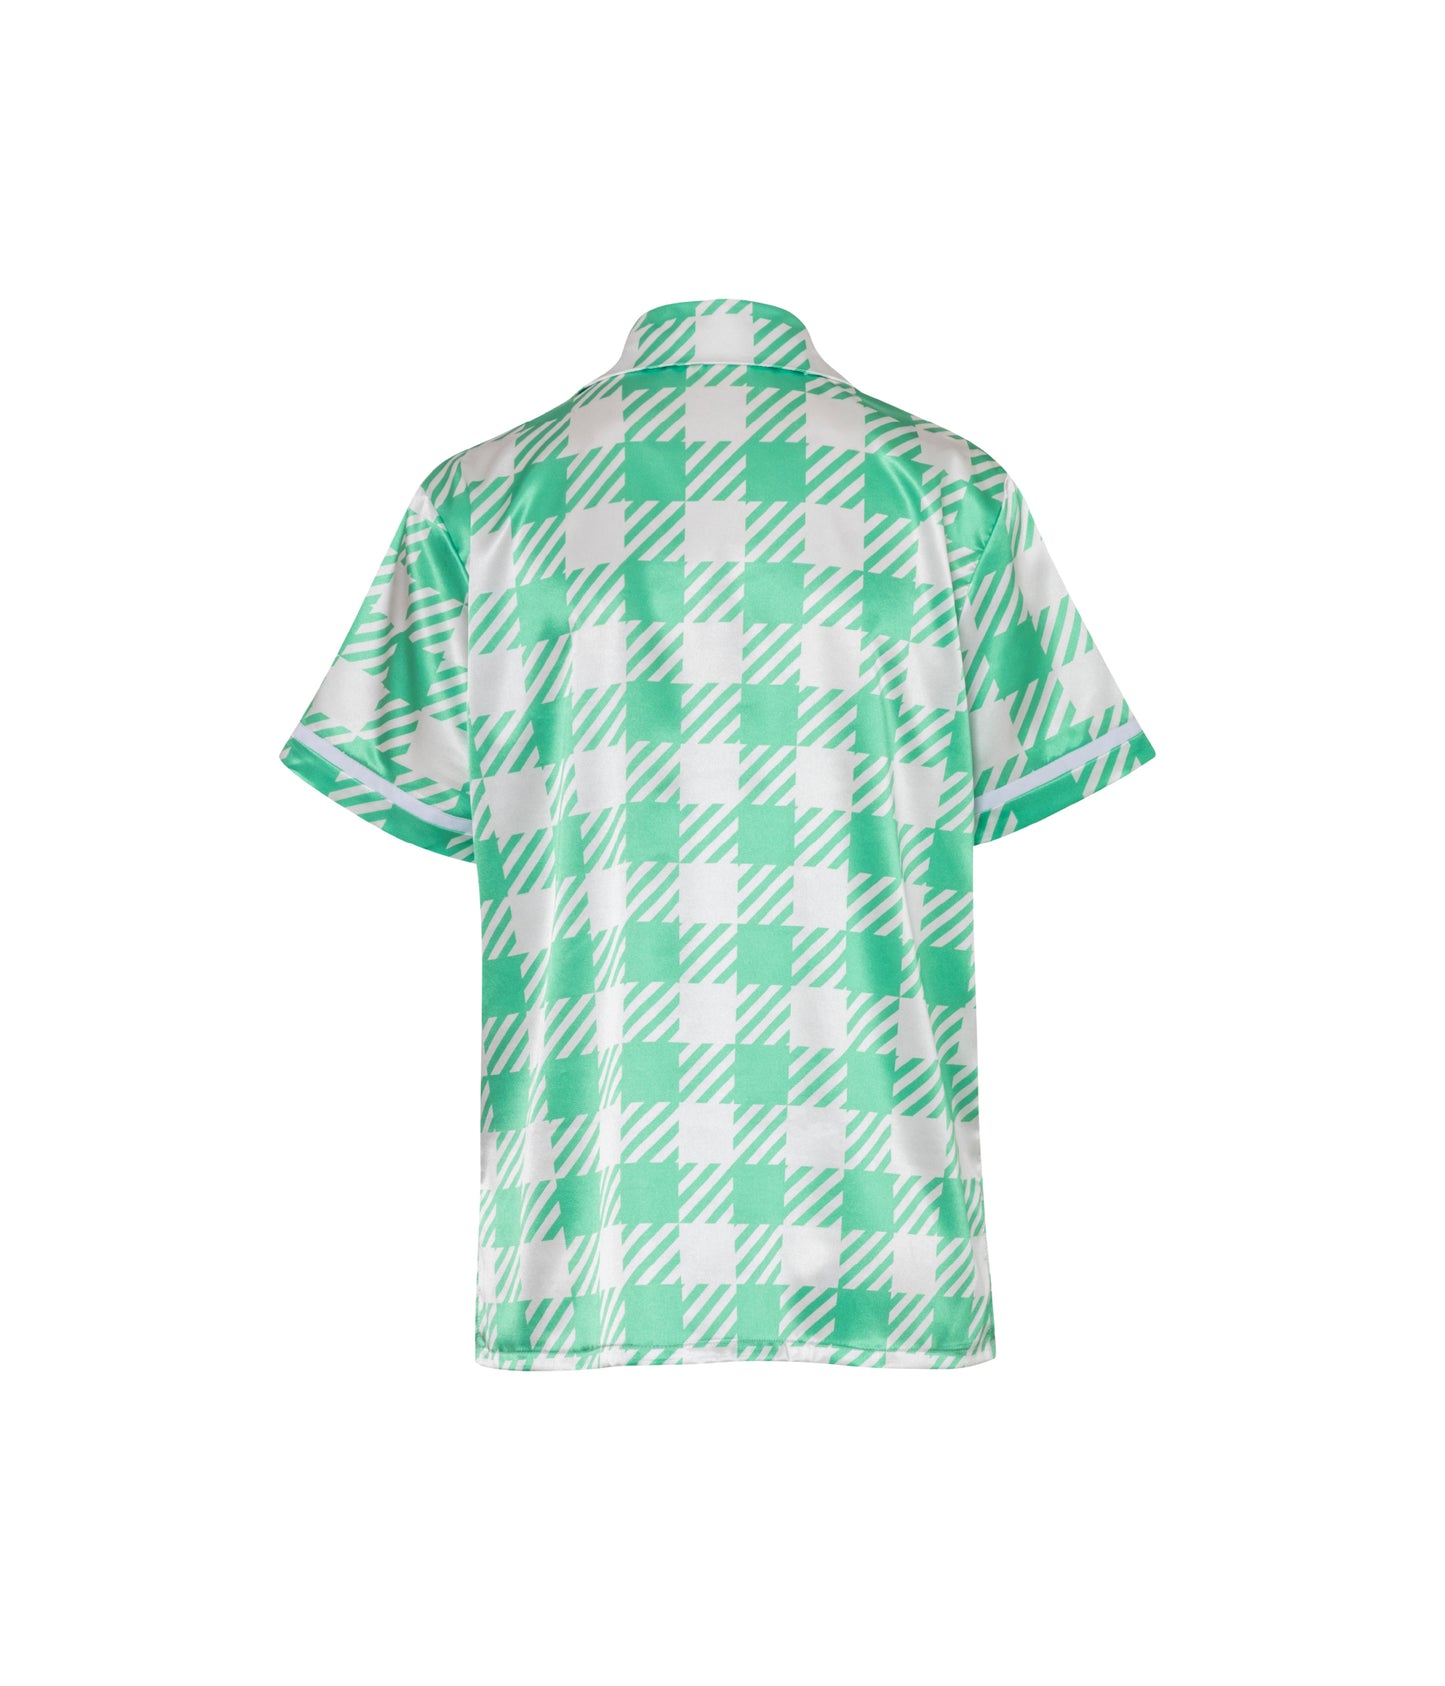 Verdelimon - Shirts - Malambo - Printed - Green Squares - Back